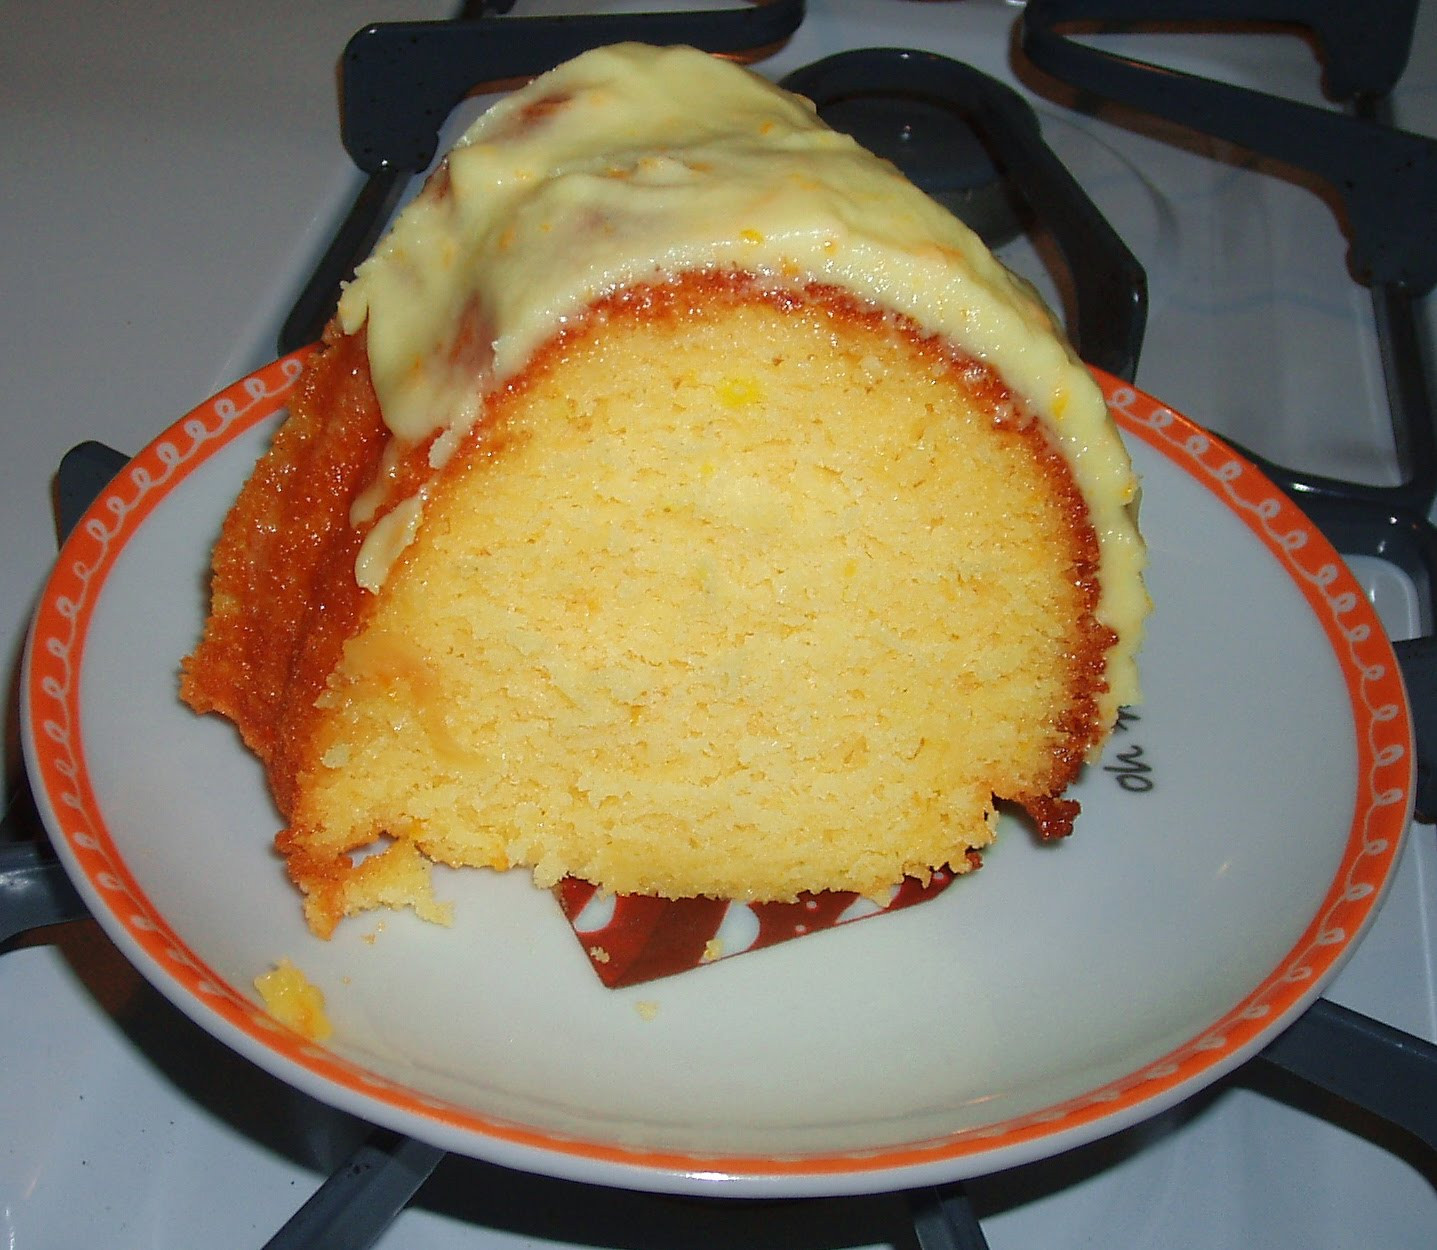 Buttermilk Dessert Recipes
 The Pastry Chef s Baking Orange Buttermilk Cake